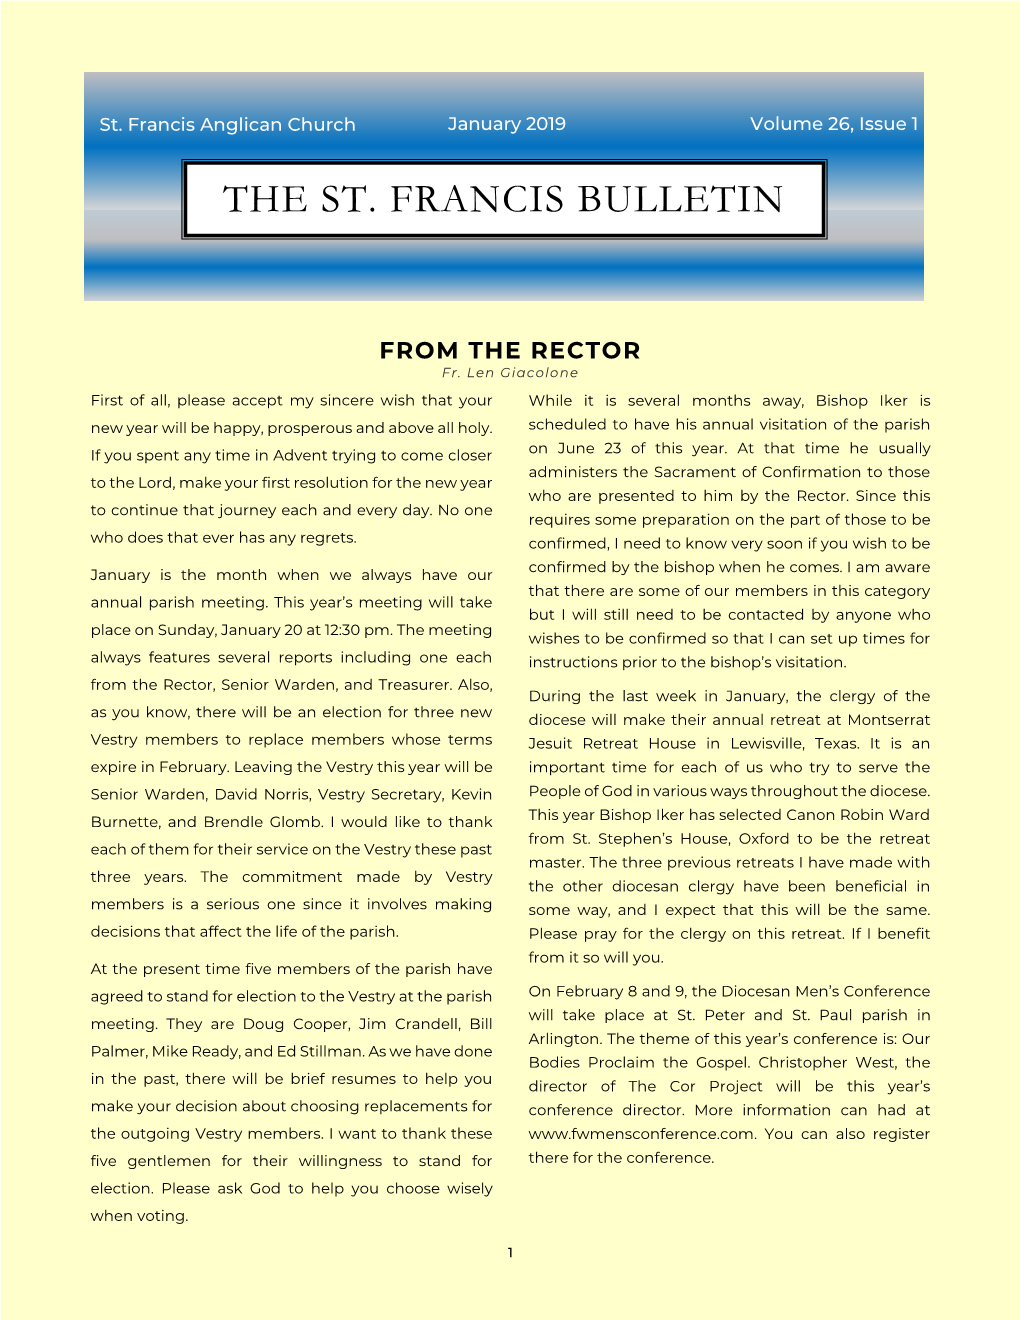 The St. Francis Bulletin